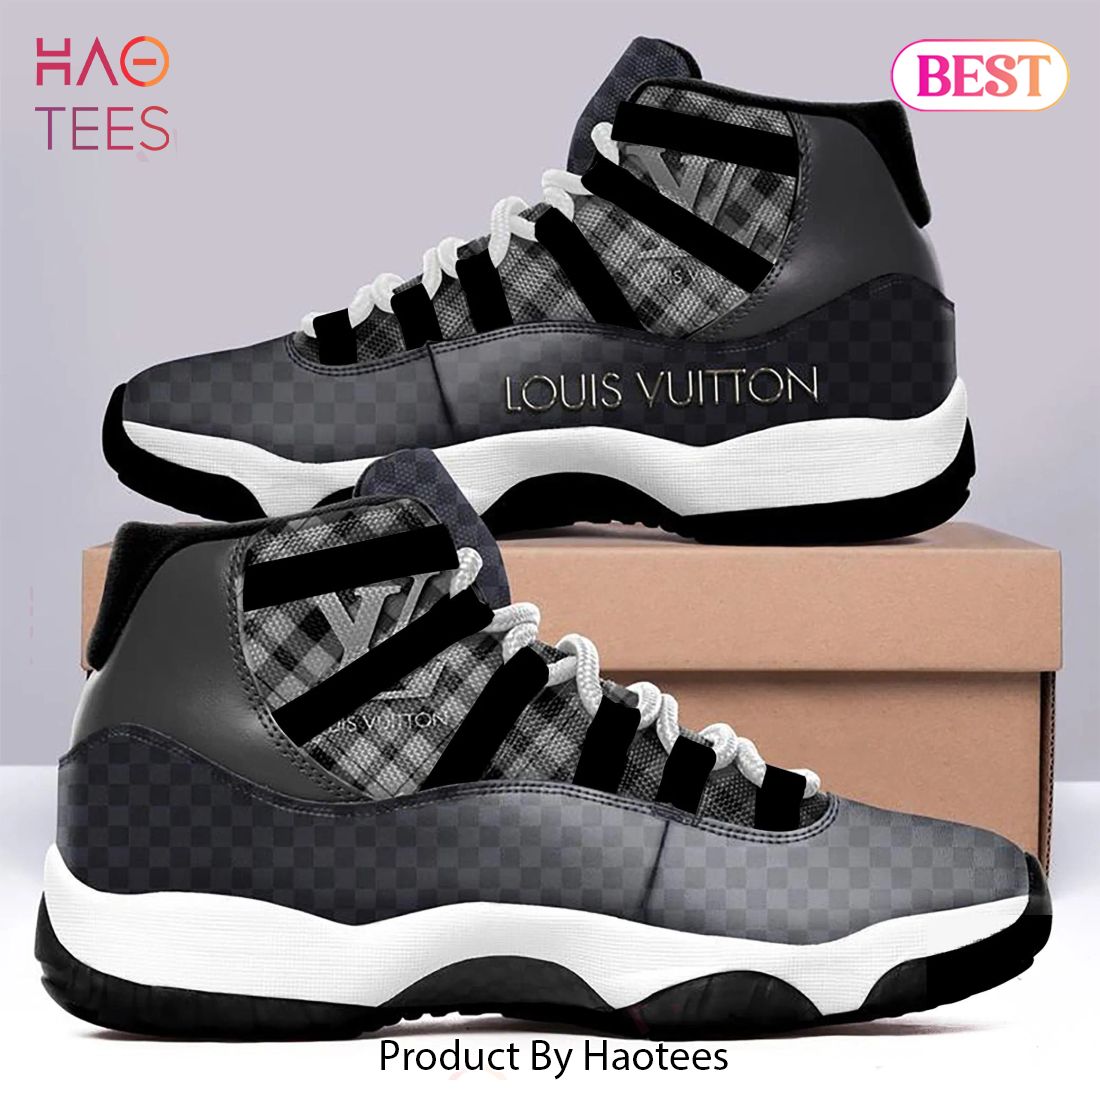 NEW FASHION] Black Grey Louis Vuitton Air Jordan 11 Sneakers Shoes